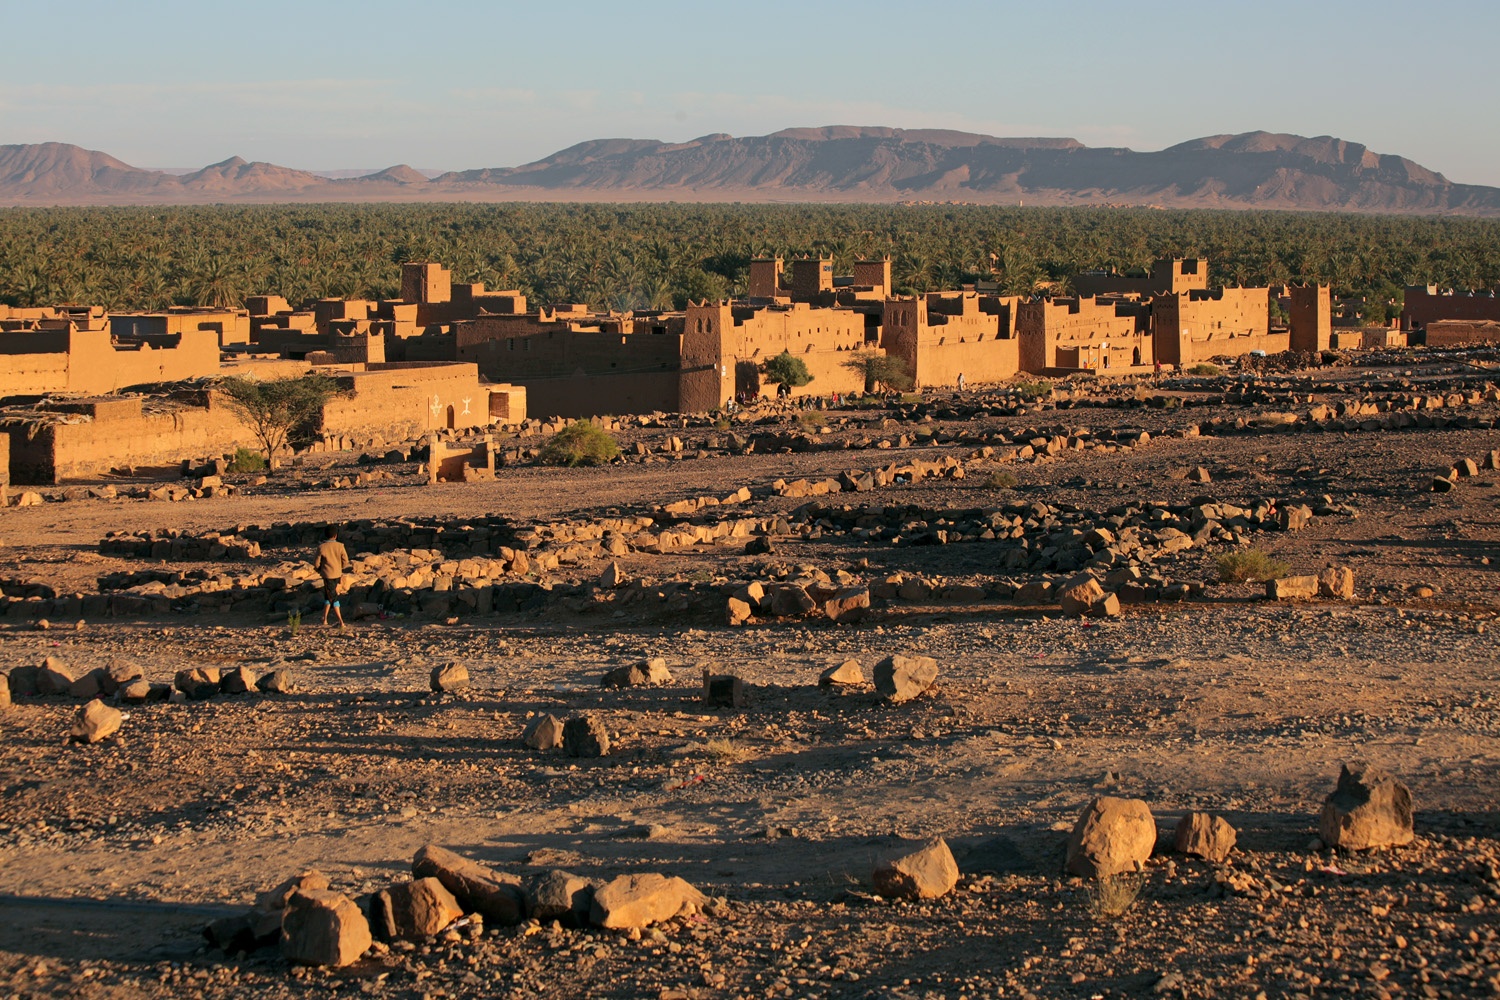 bill-hocker-near-ircheg-draa-valley-morocco-2013